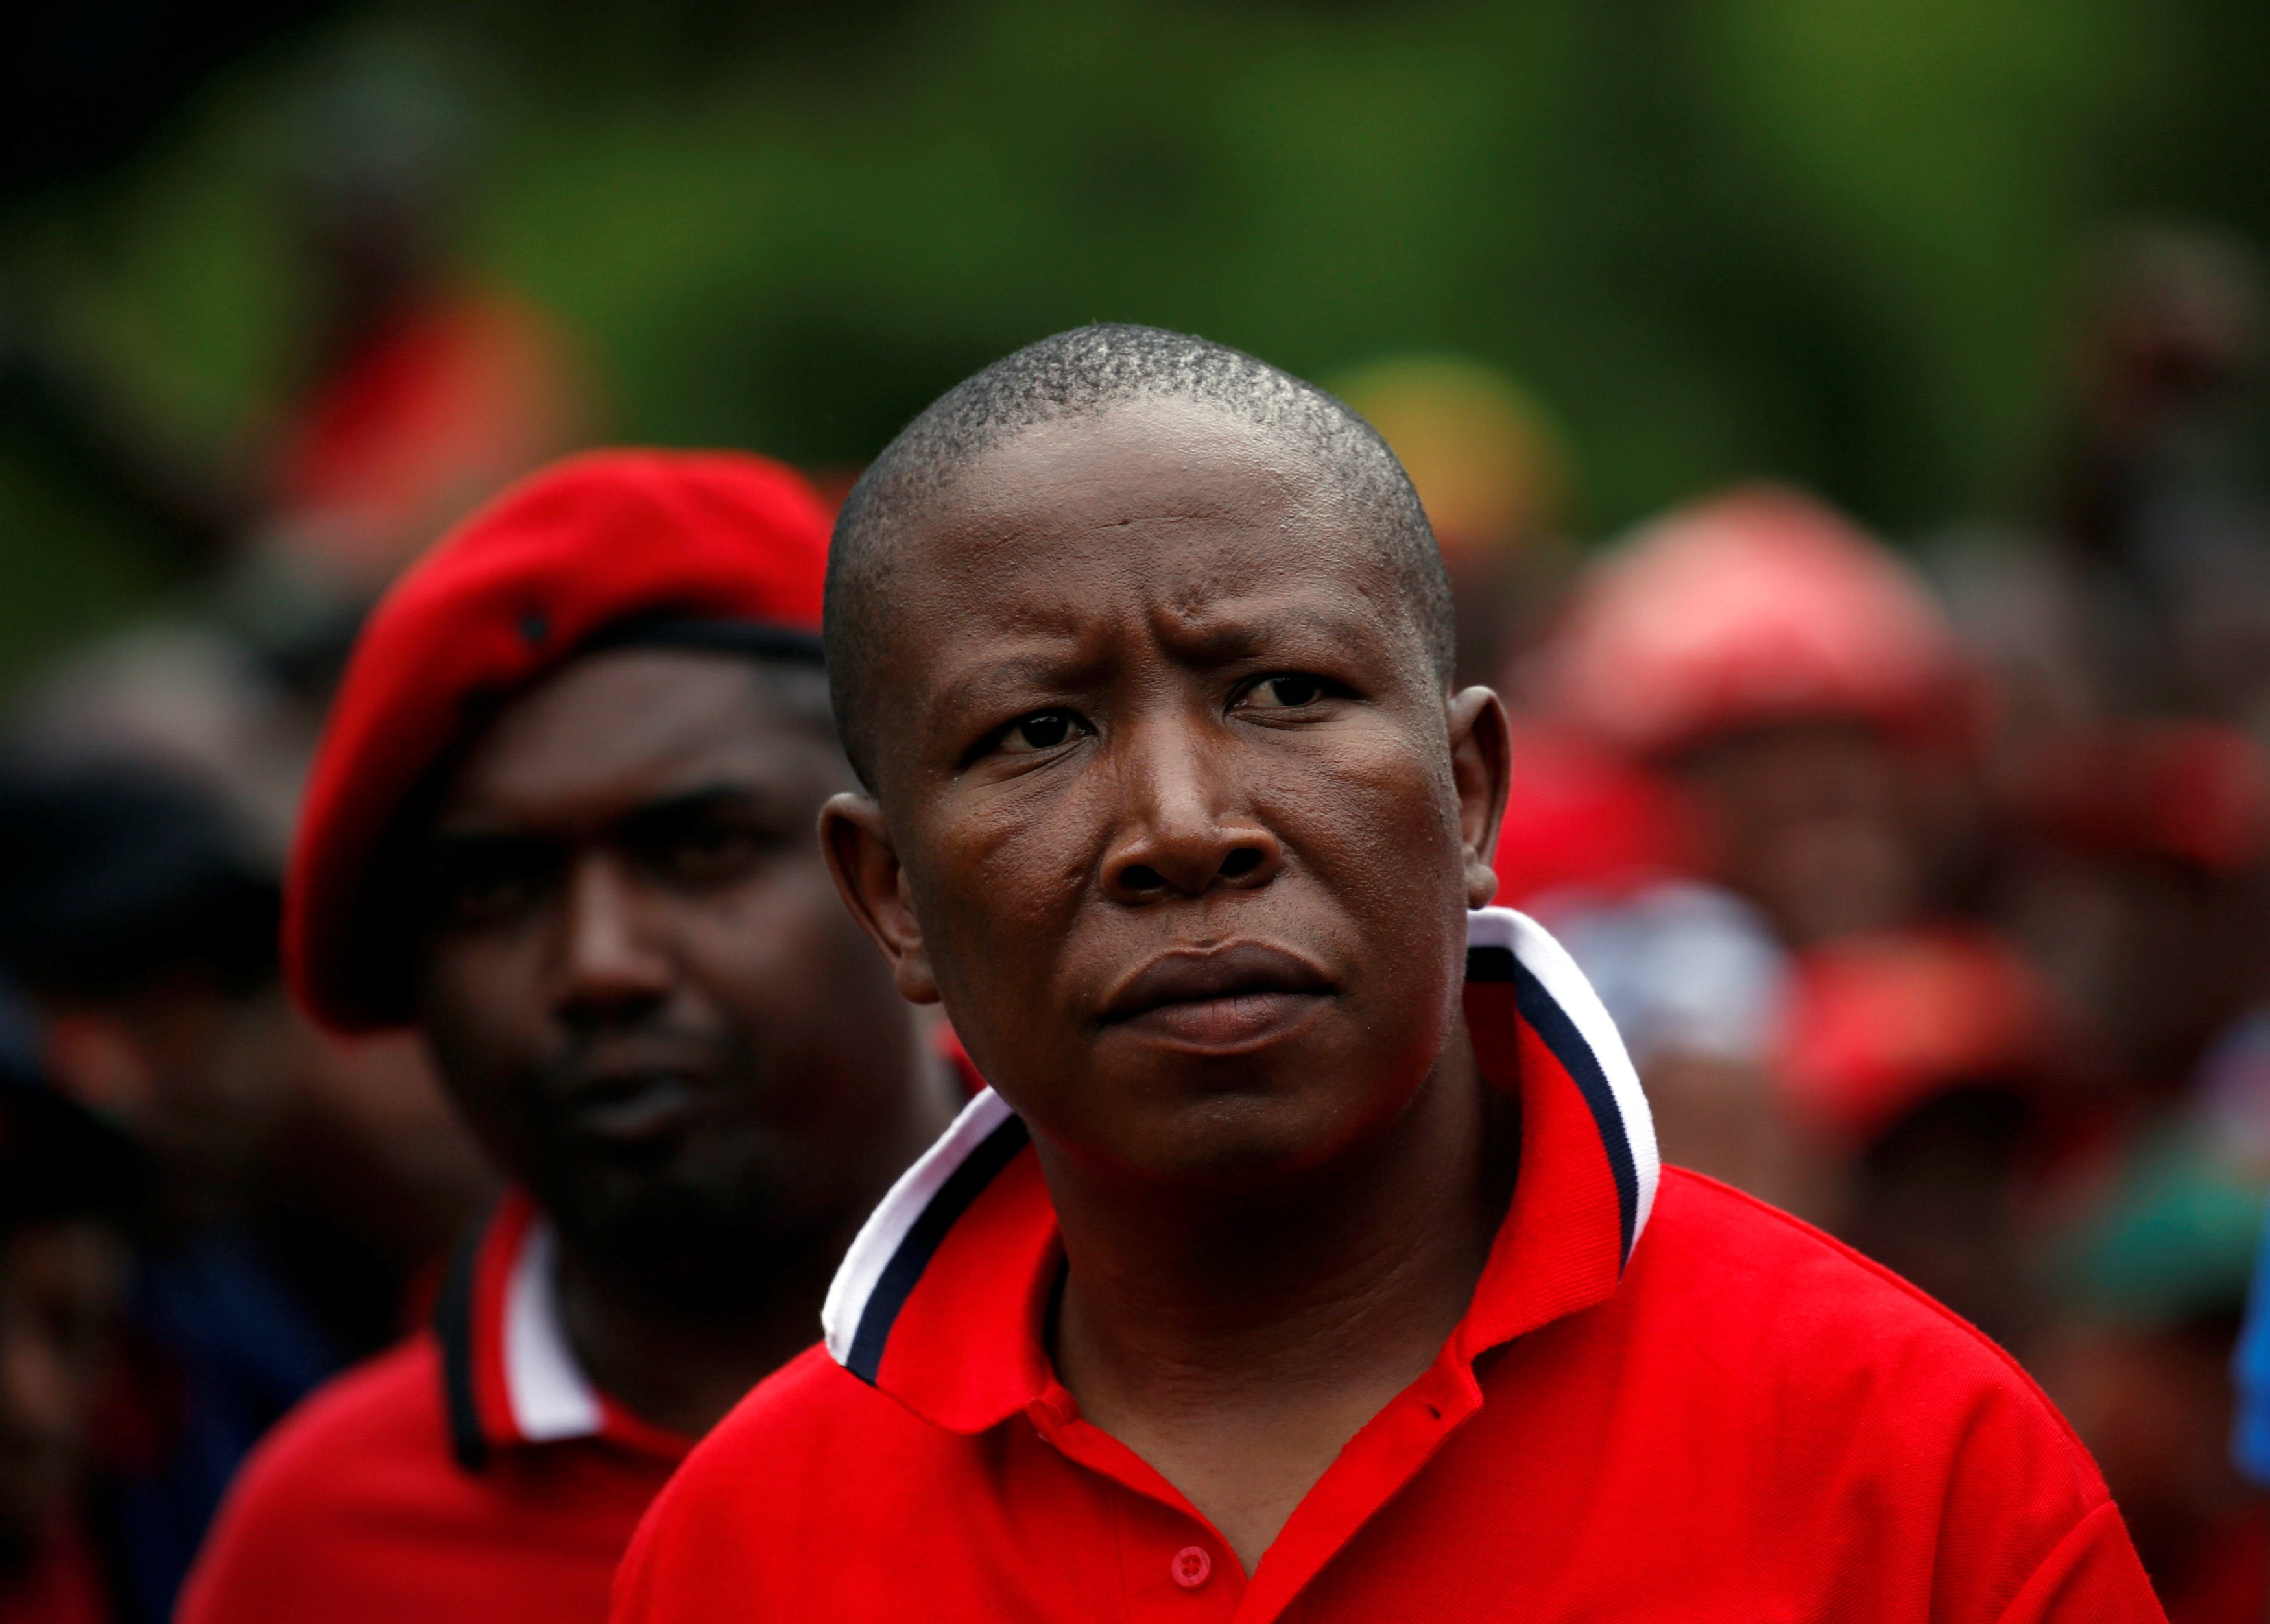 South African opposition figure Malema seeks to overturn apartheid-era land law